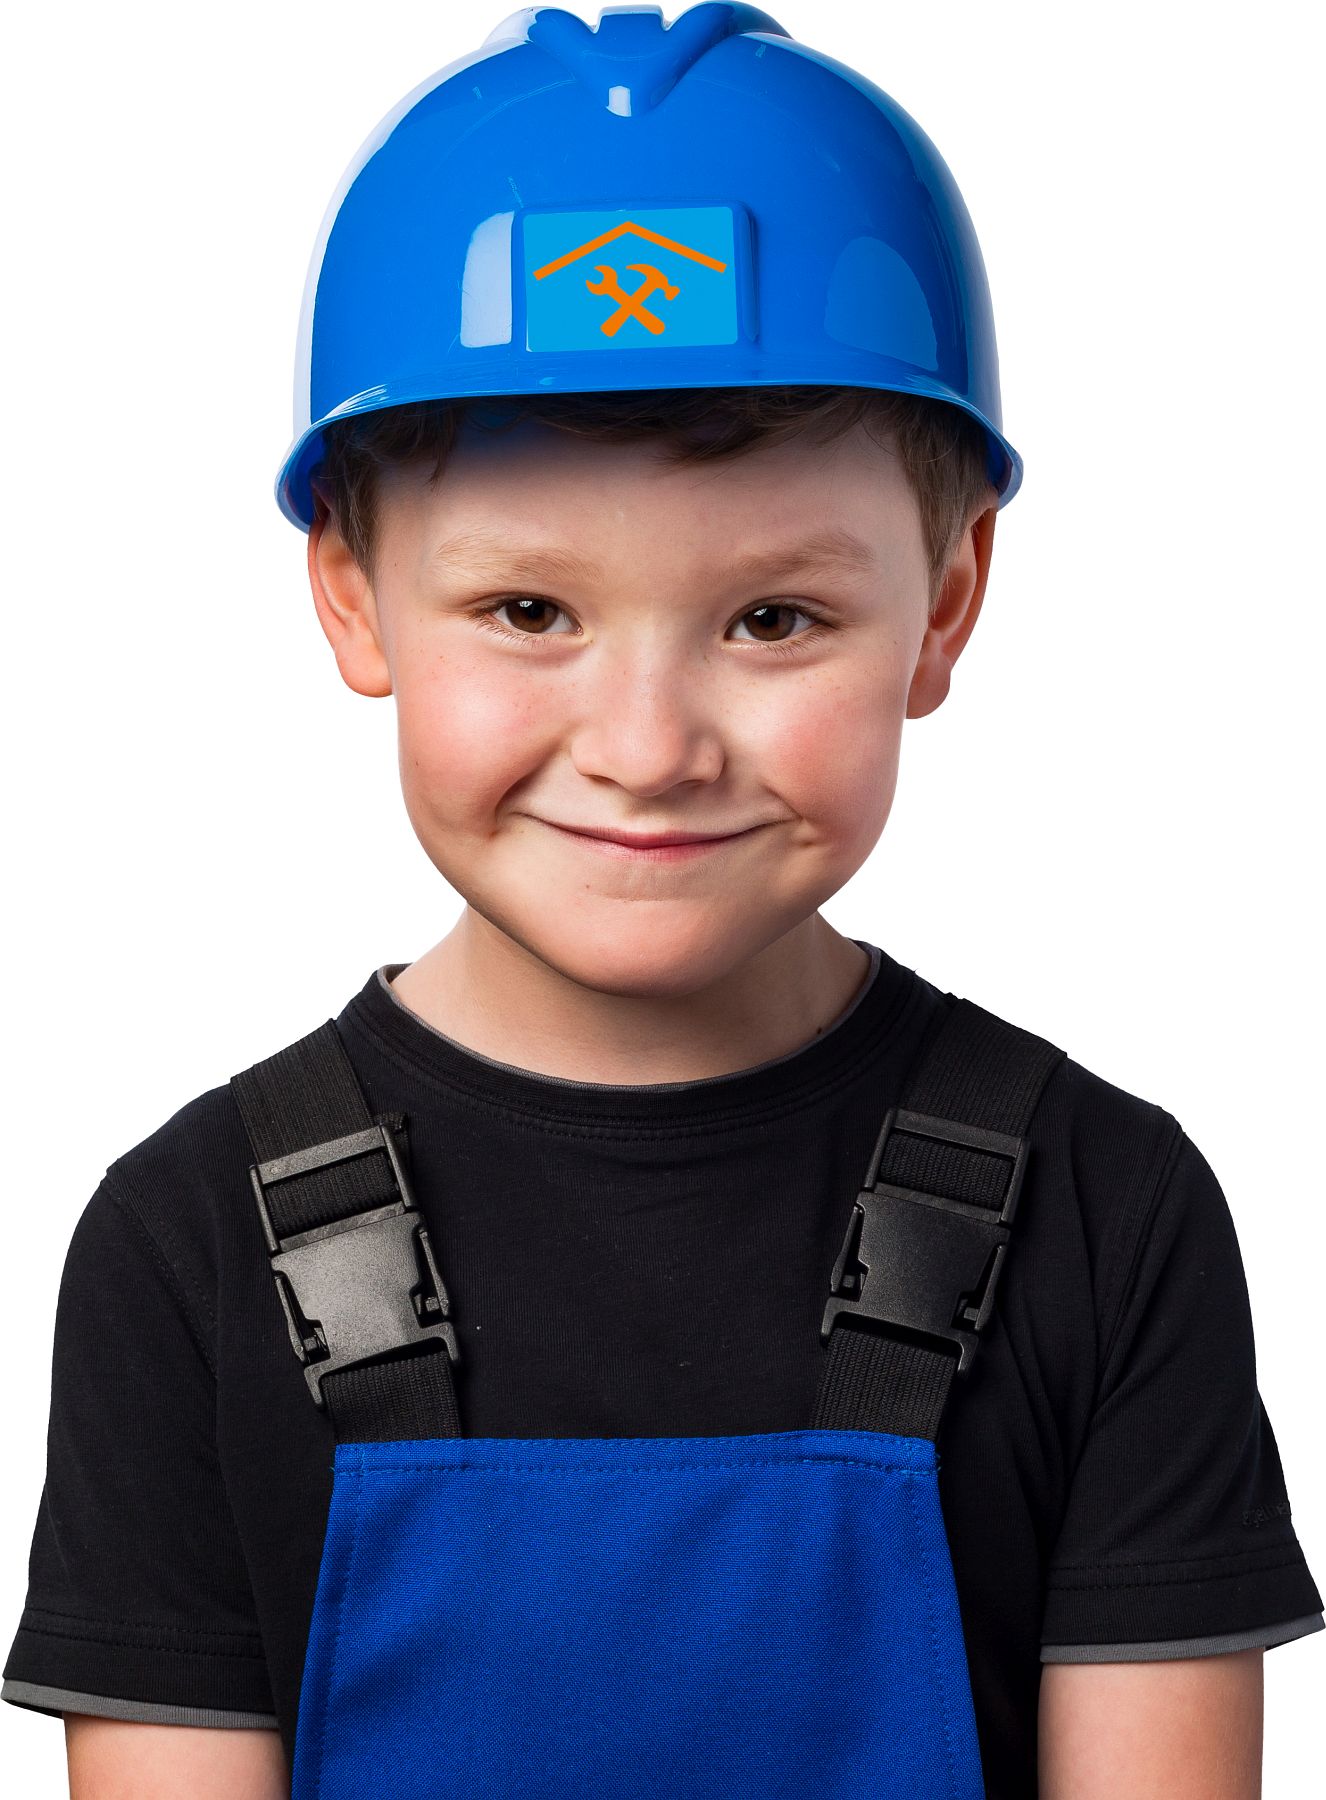 Building helmet, blue